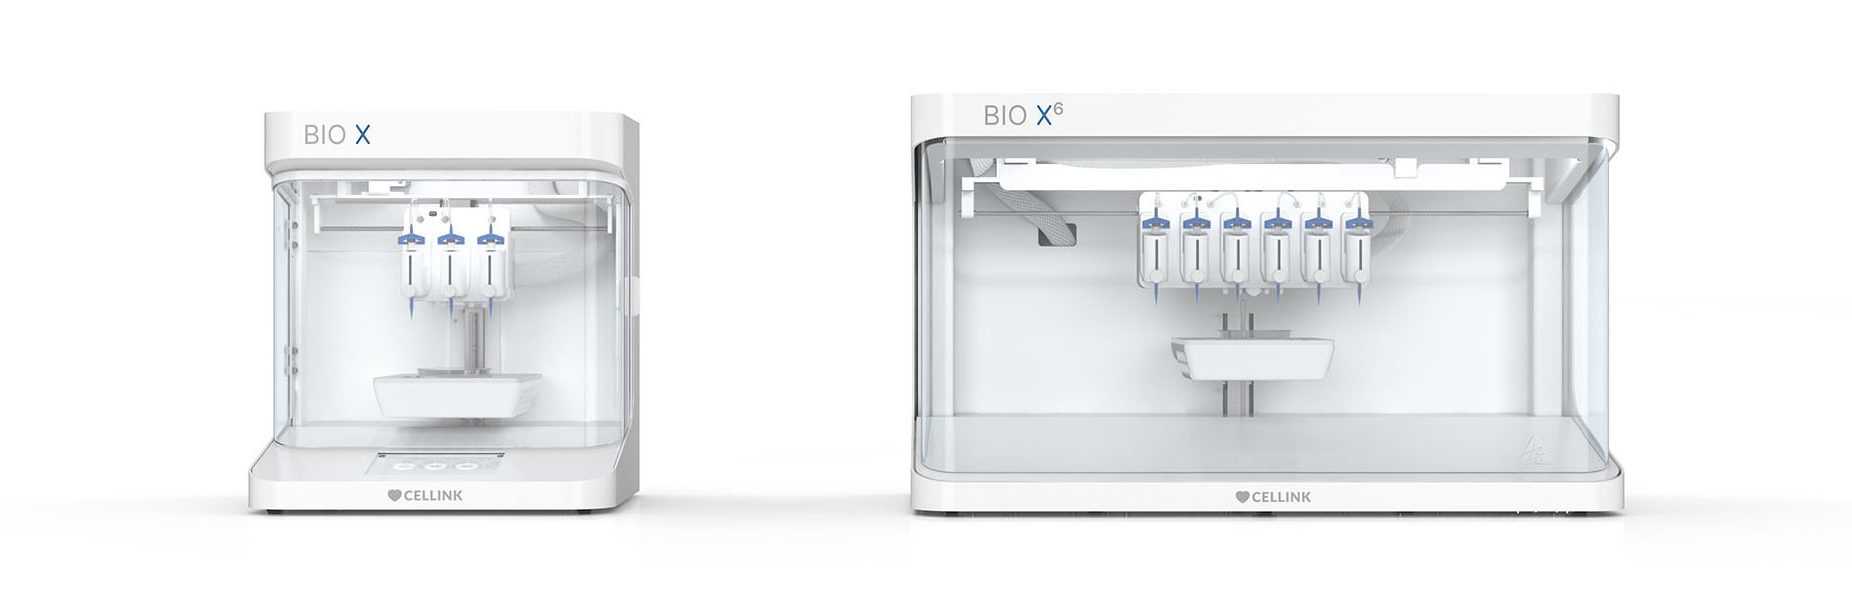 Cellink's Bio X and Bio X6 bioprinters.